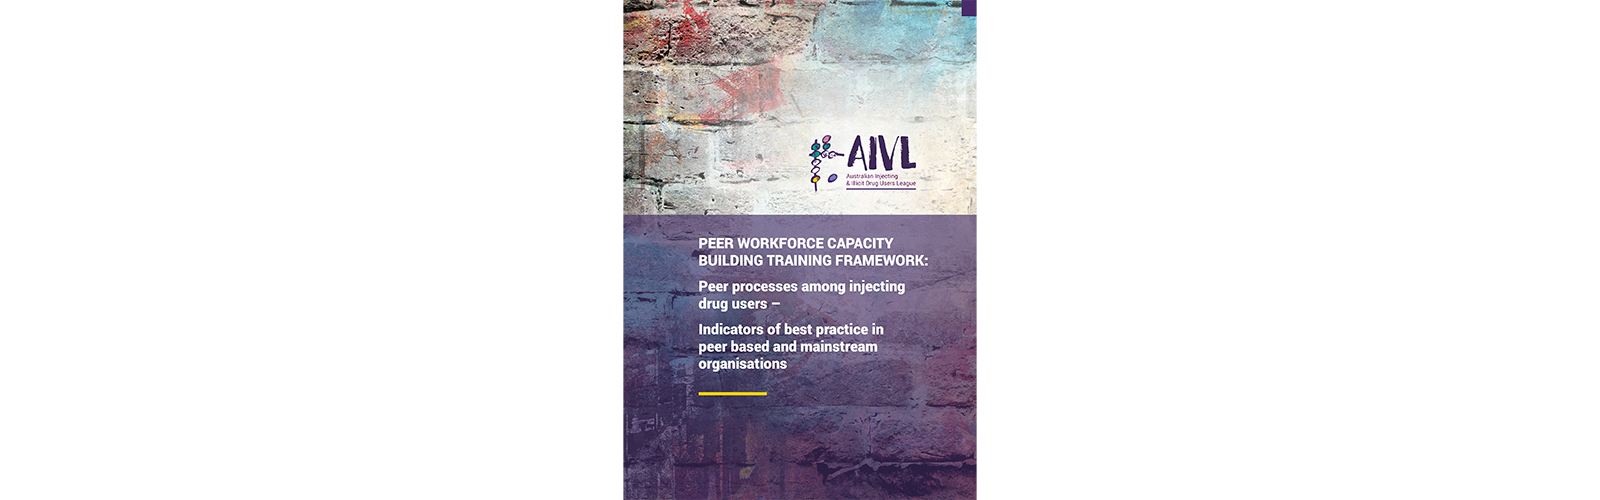 Featured image for “Peer Workforce Capacity Building Training Framework”